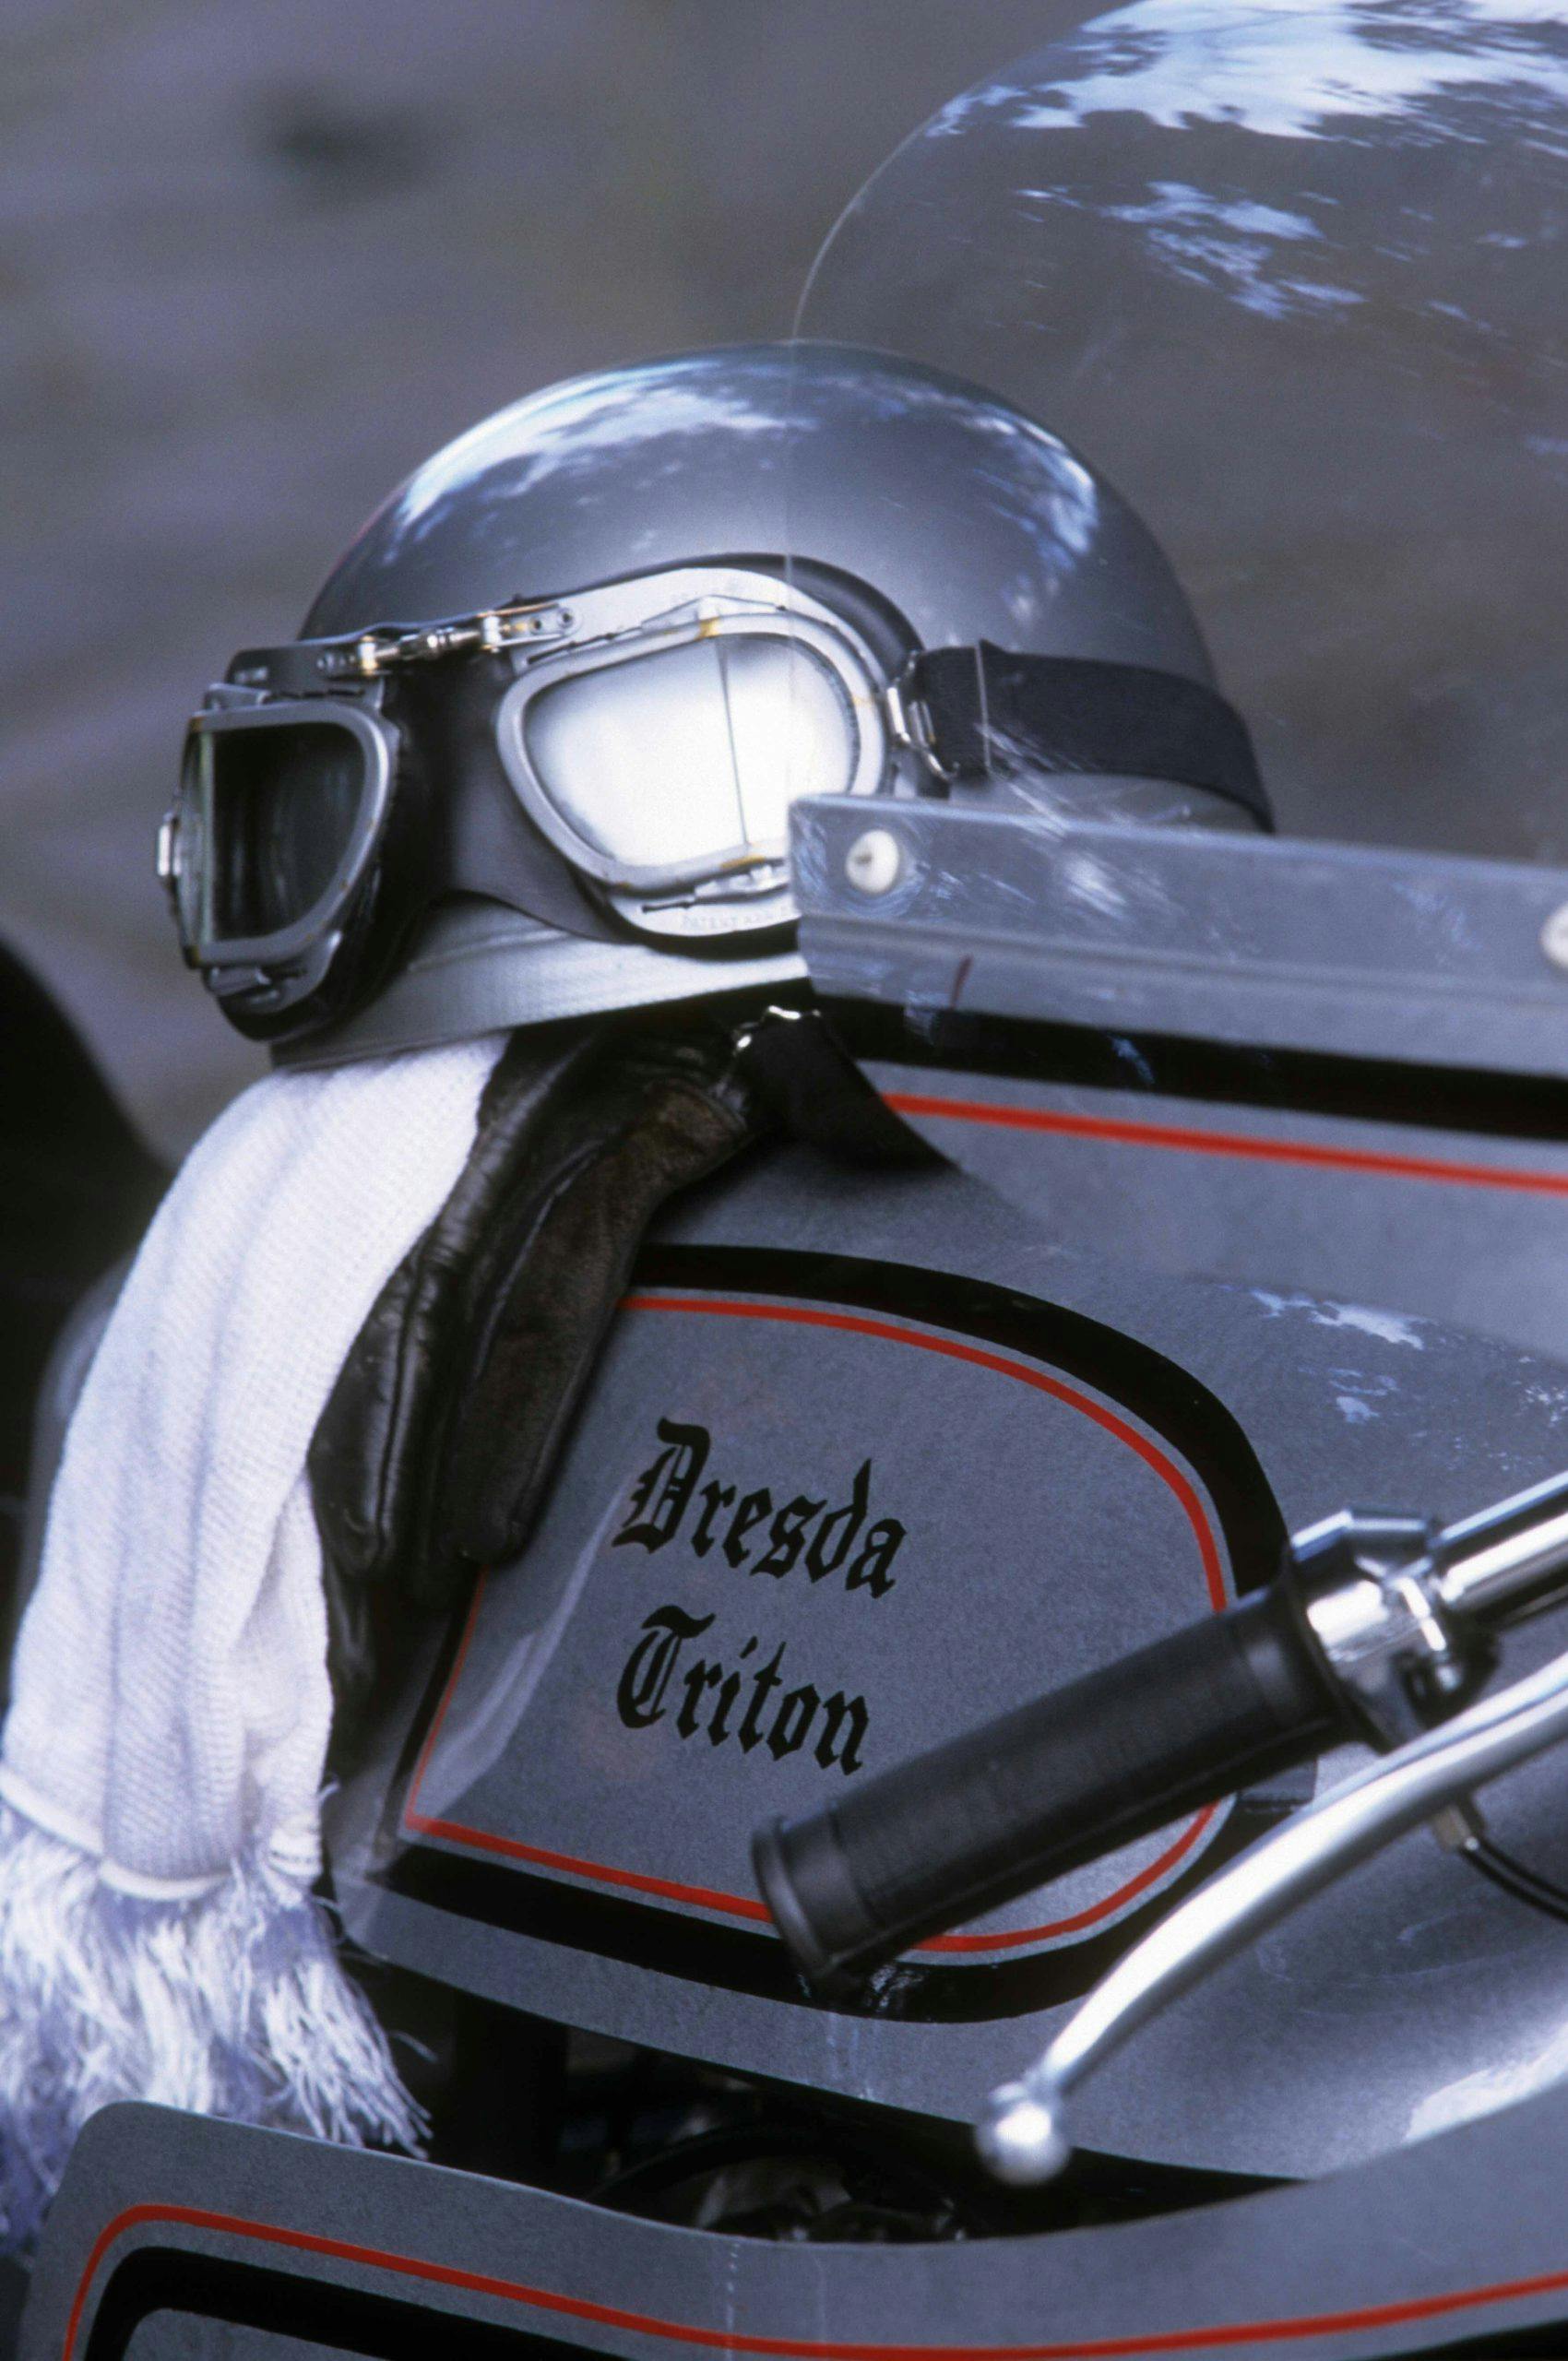 1965 Dresda Triton helmet tank detail